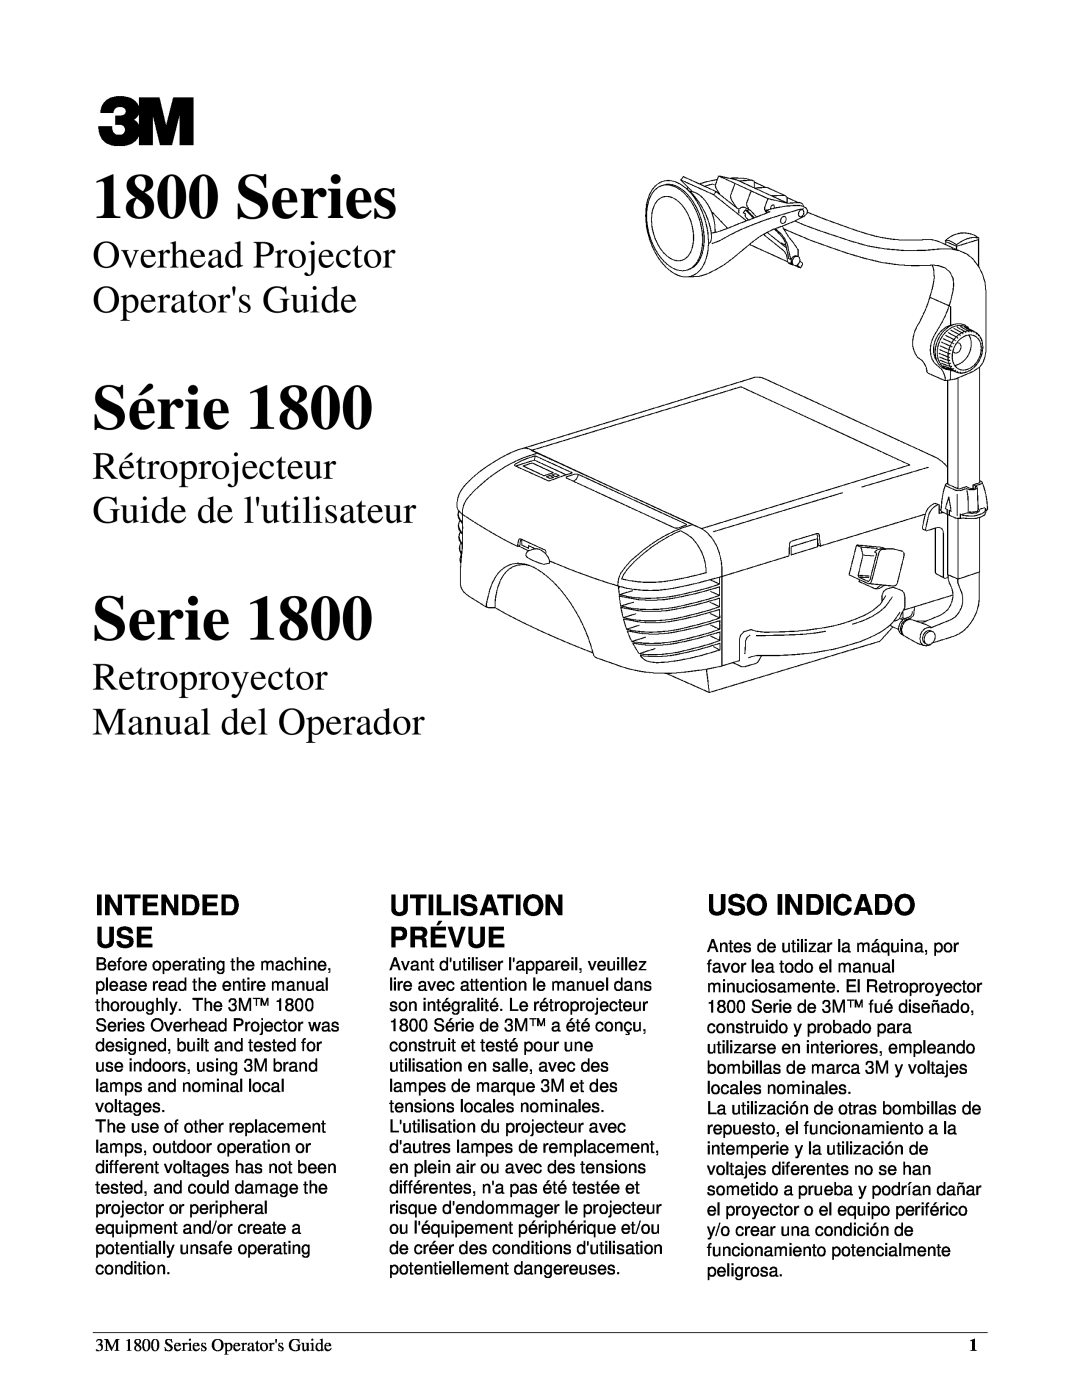 3M 1800 Series manual Intended Use, Utilisation Prévue, Uso Indicado, Série, Overhead Projector Operators Guide 